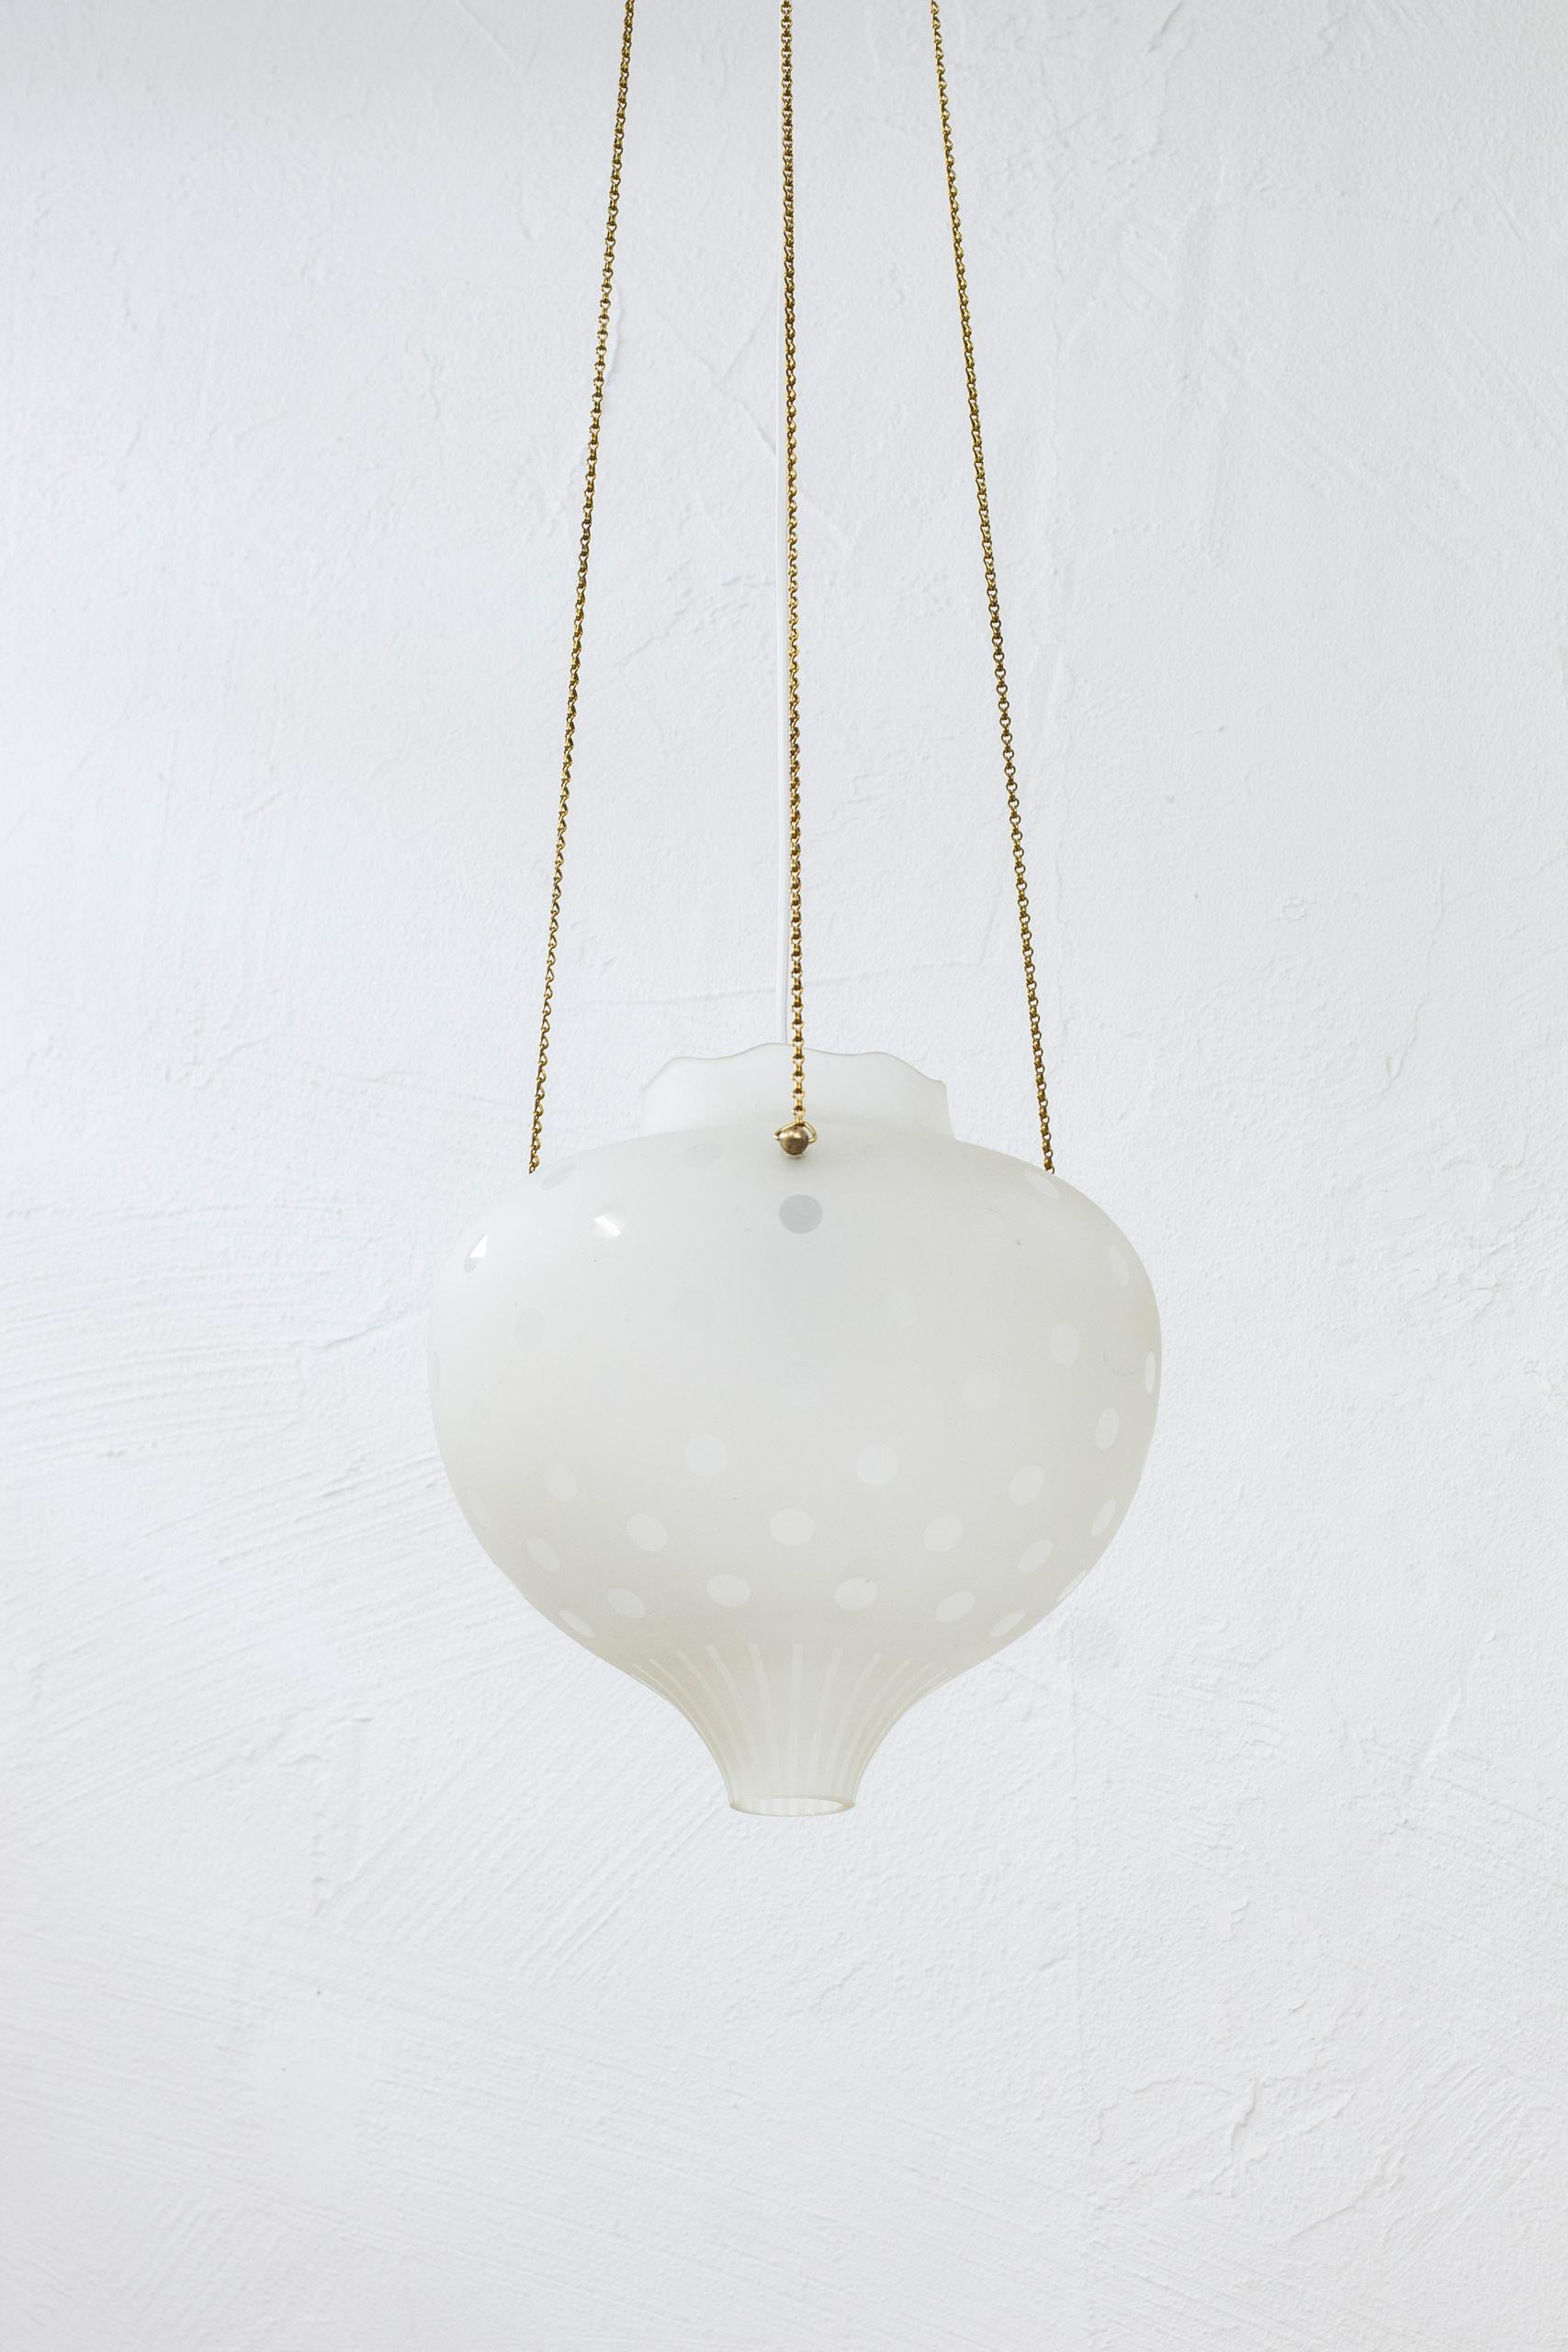 Scandinavian Modern Swedish Modern Etched Glass Pendant Lamp by Flygsfors, Sweden, 1940s